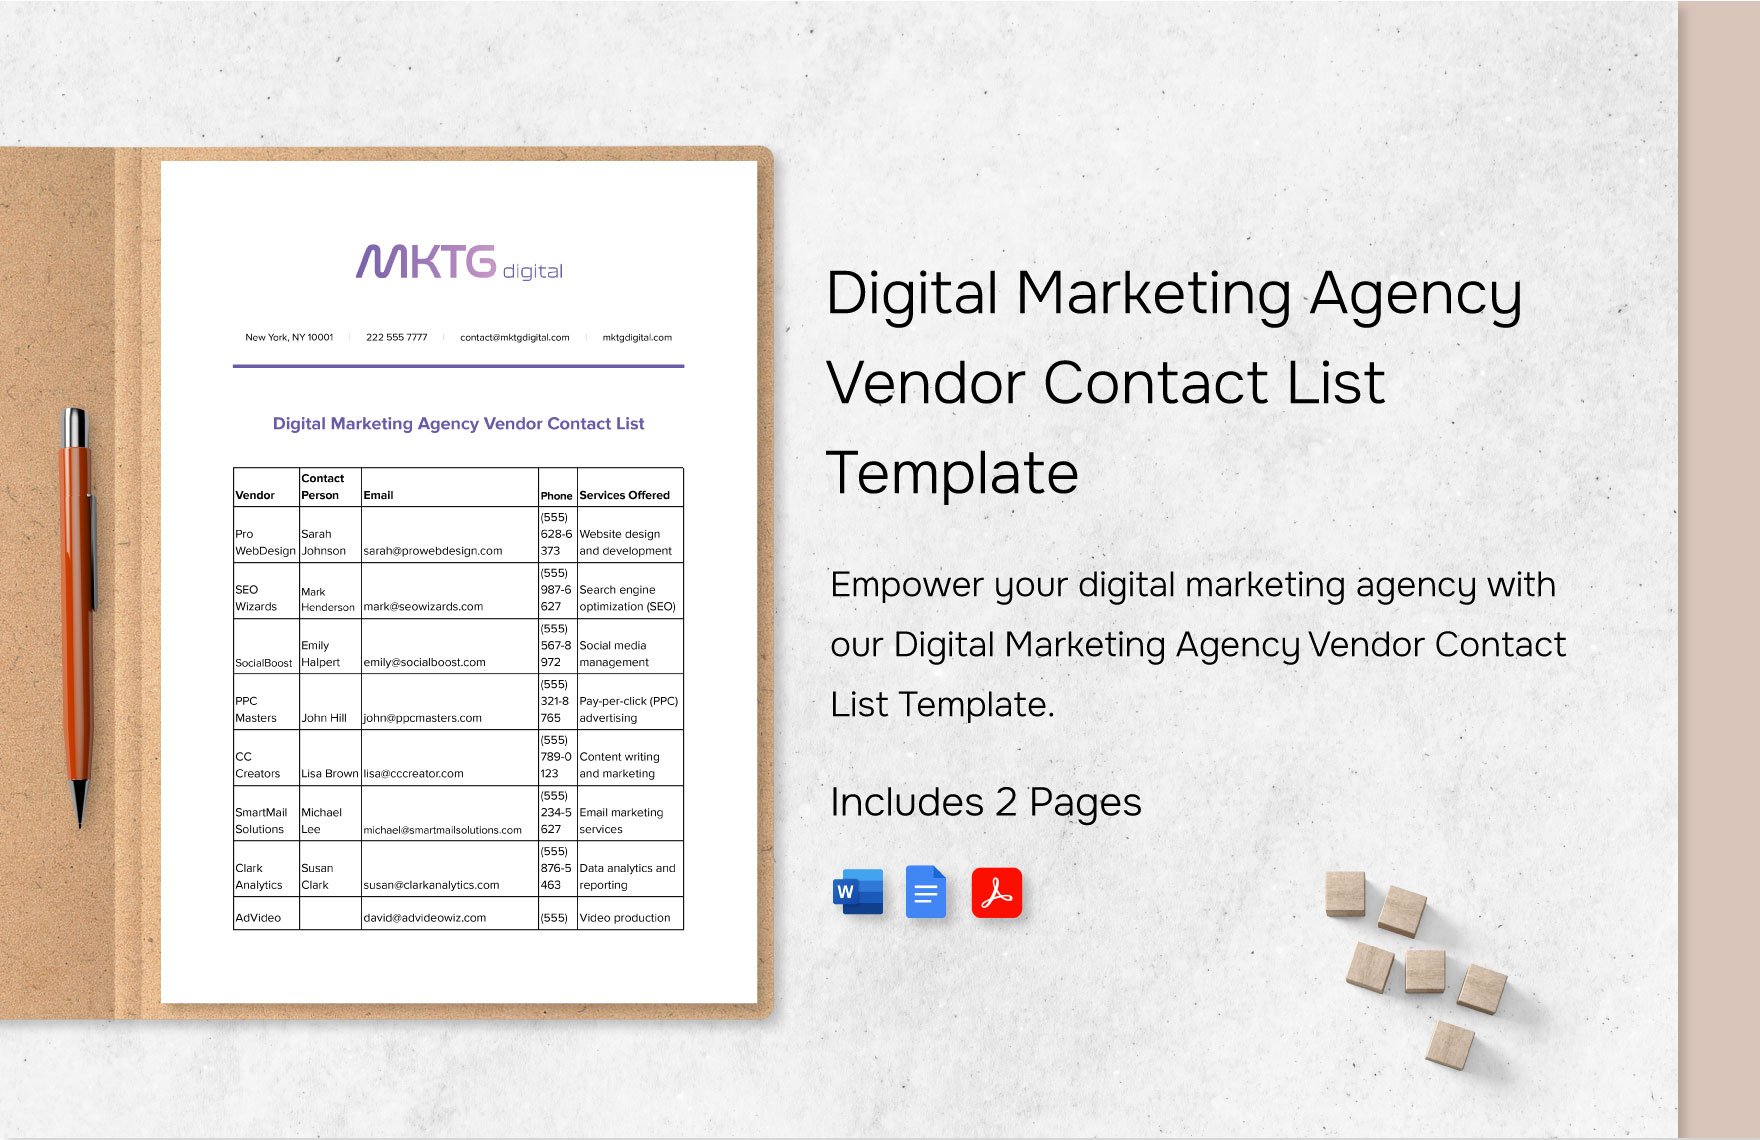 Digital Marketing Agency Vendor Contact List Template